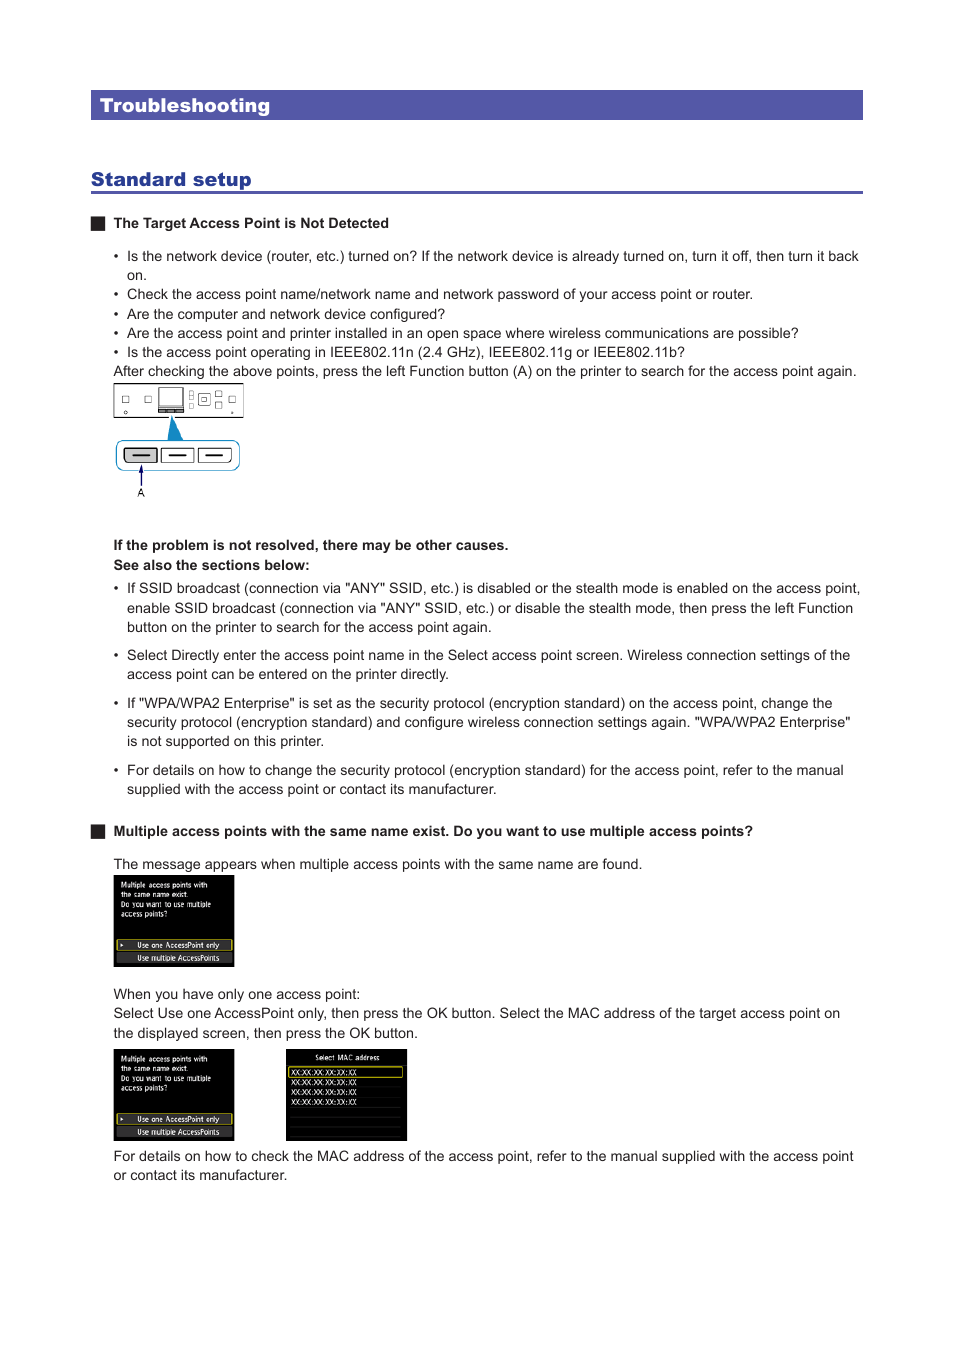 Troubleshooting standard setup | Canon PIXMA MG6450 User Manual | Page